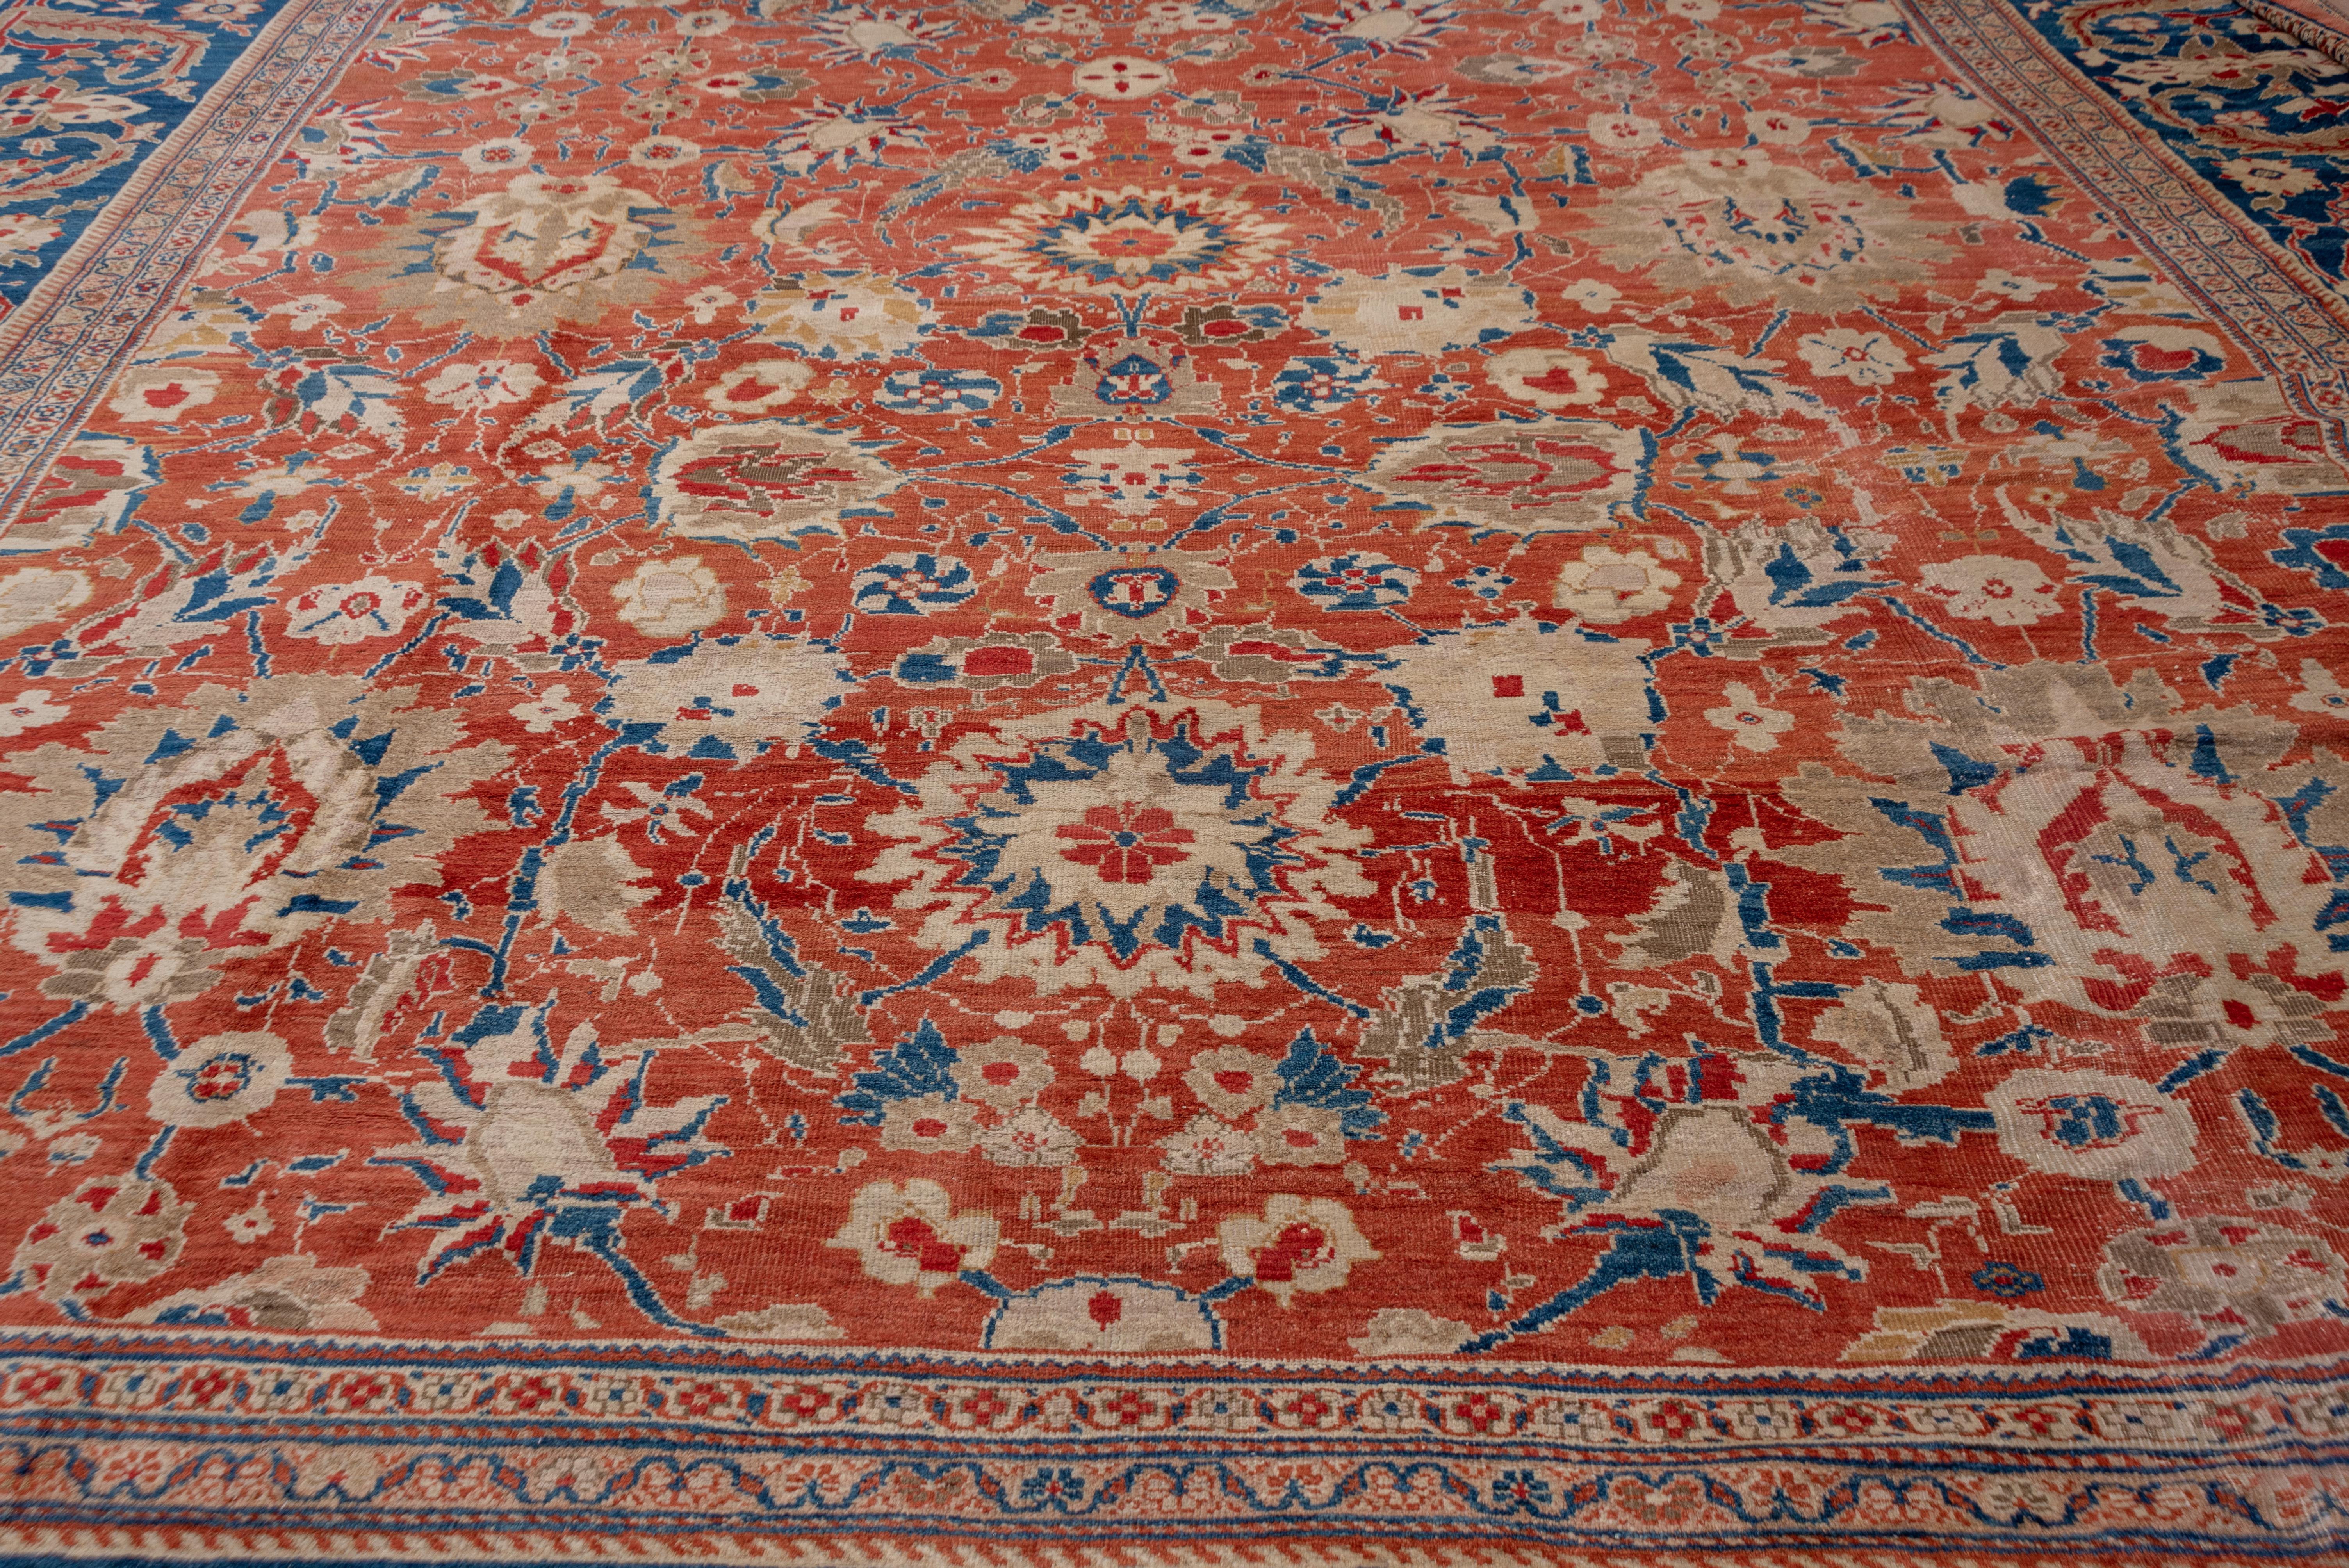 Magnificent Antique Persian Sultanabad Carpet, Bright Orange & Red Allover Field 1